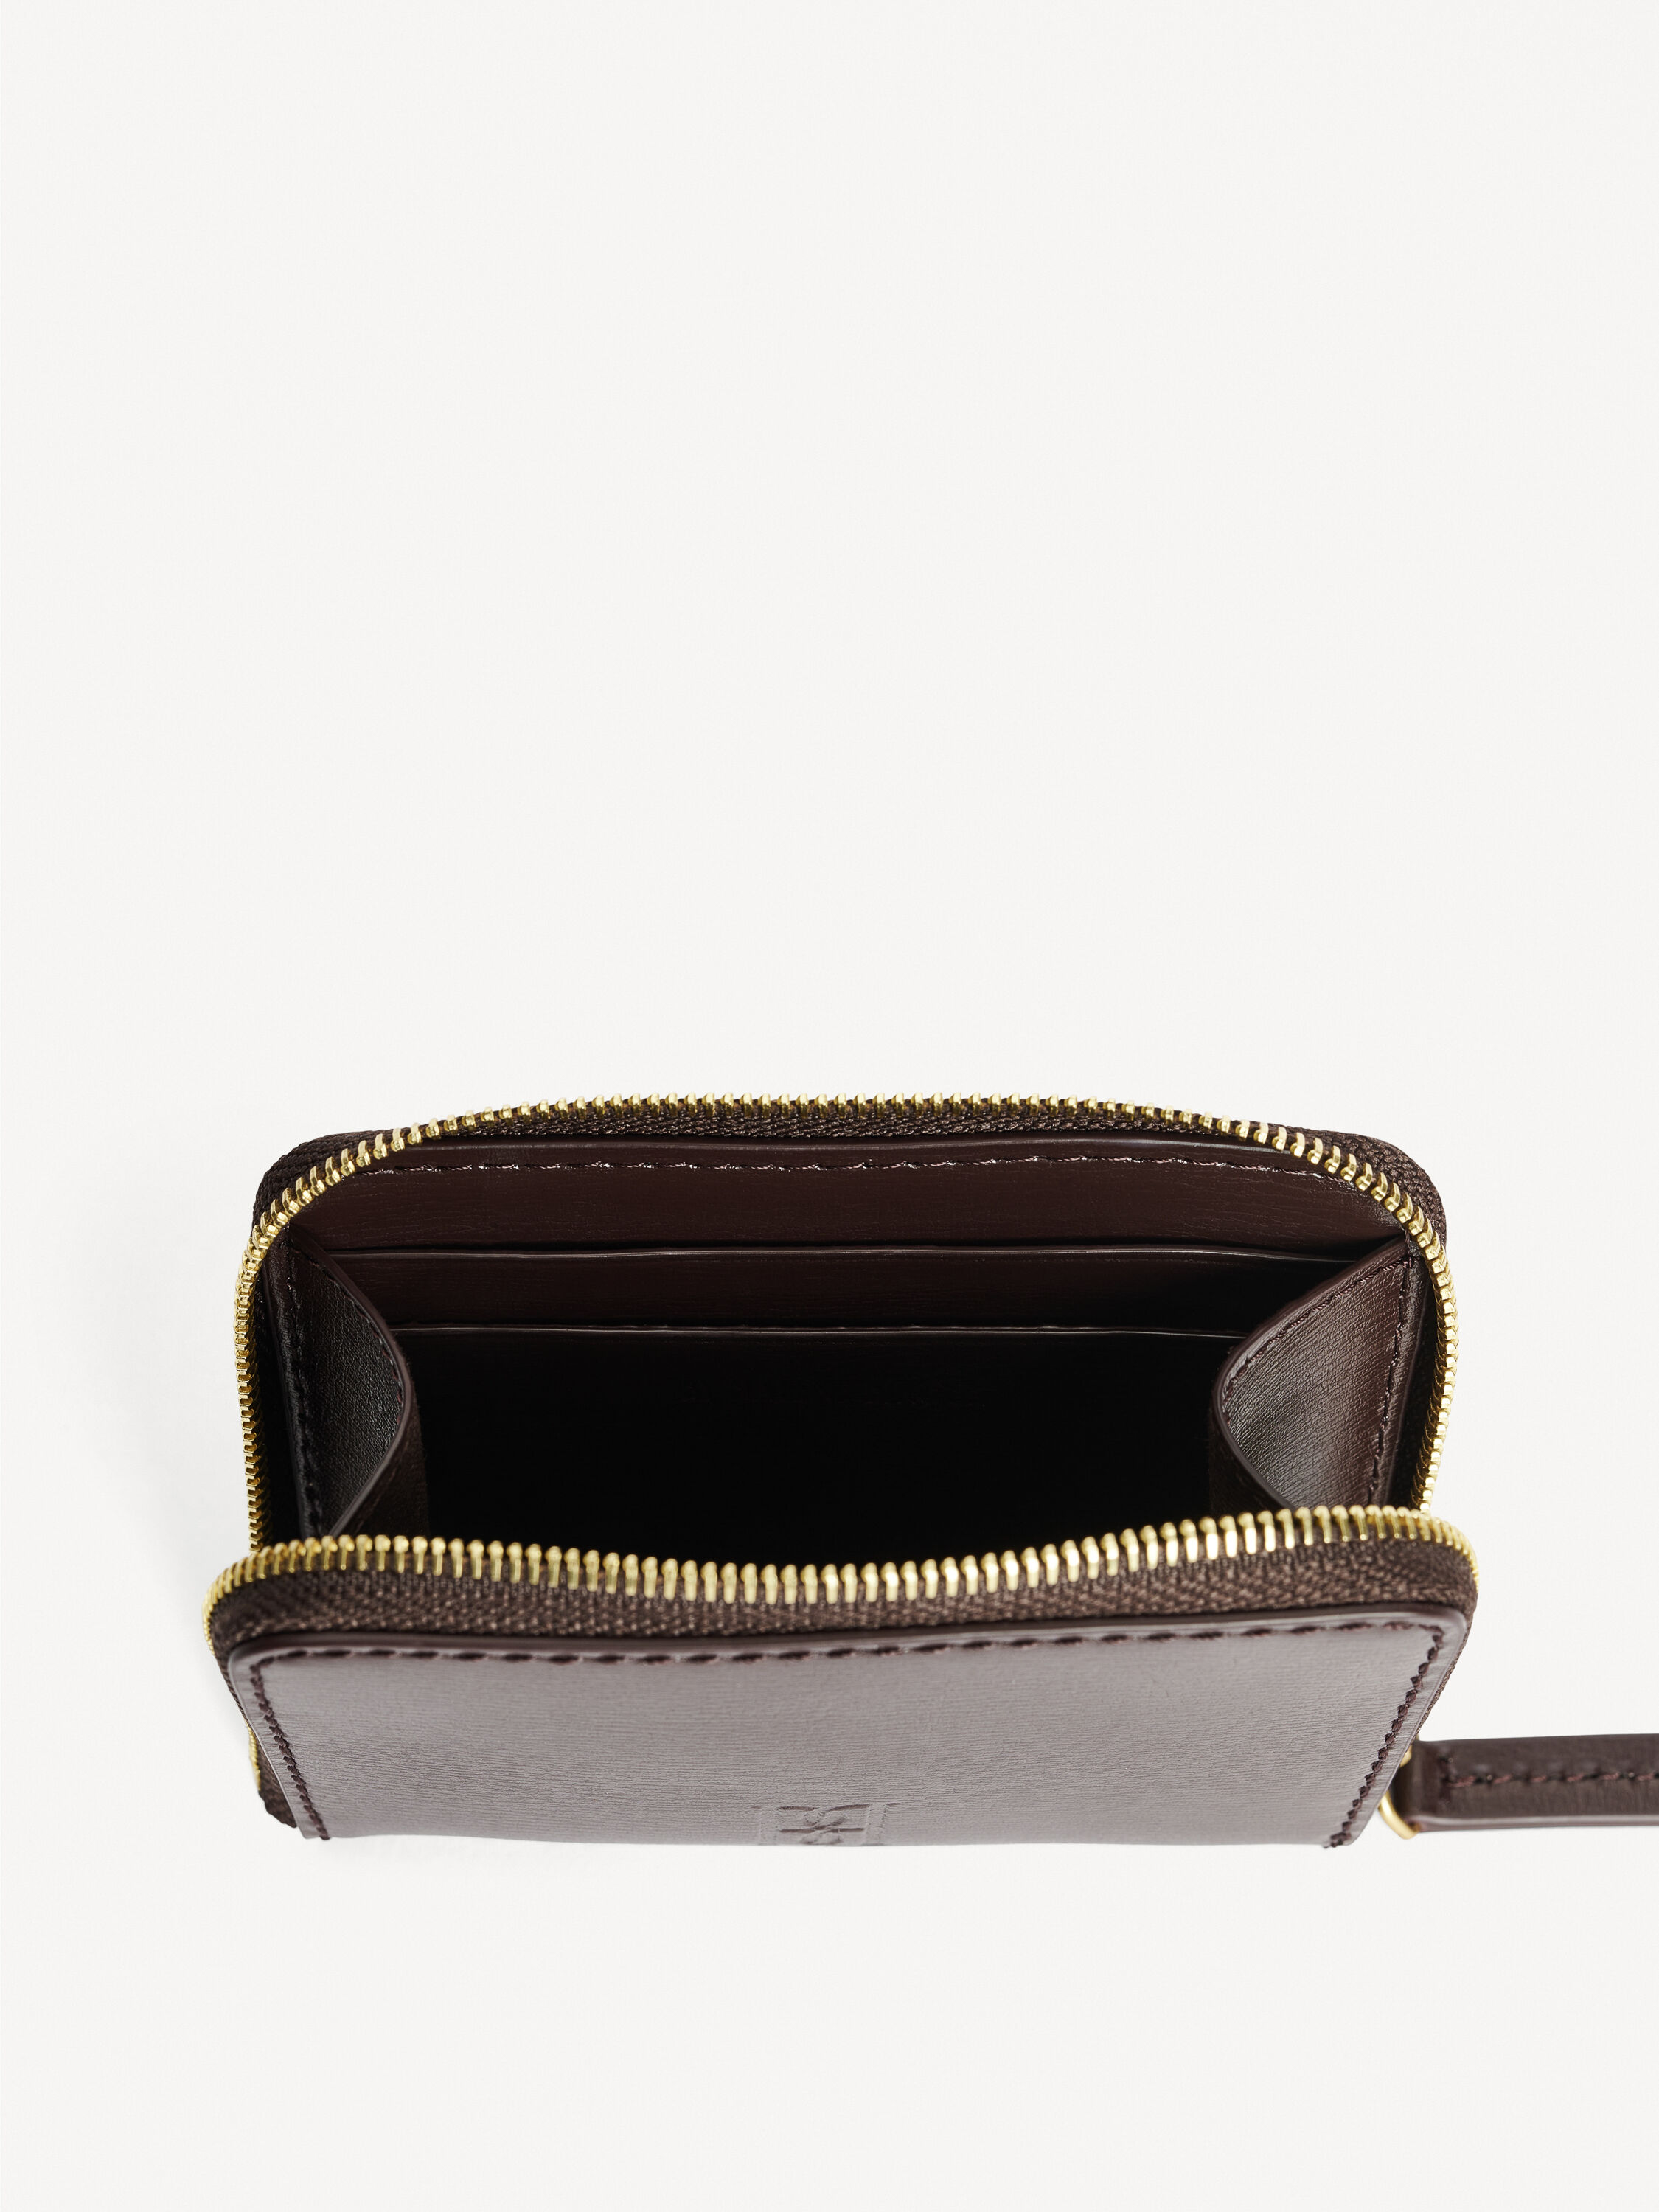 Top Fashion Designer High Quality Bucket Bag Free Round Coin Purse With  Detachable Shoulder Strap Multiple Backwards Angle Handbag Shoulder Bag  Crossbody Bag 57068 From Designerbag5, $45.7 | DHgate.Com